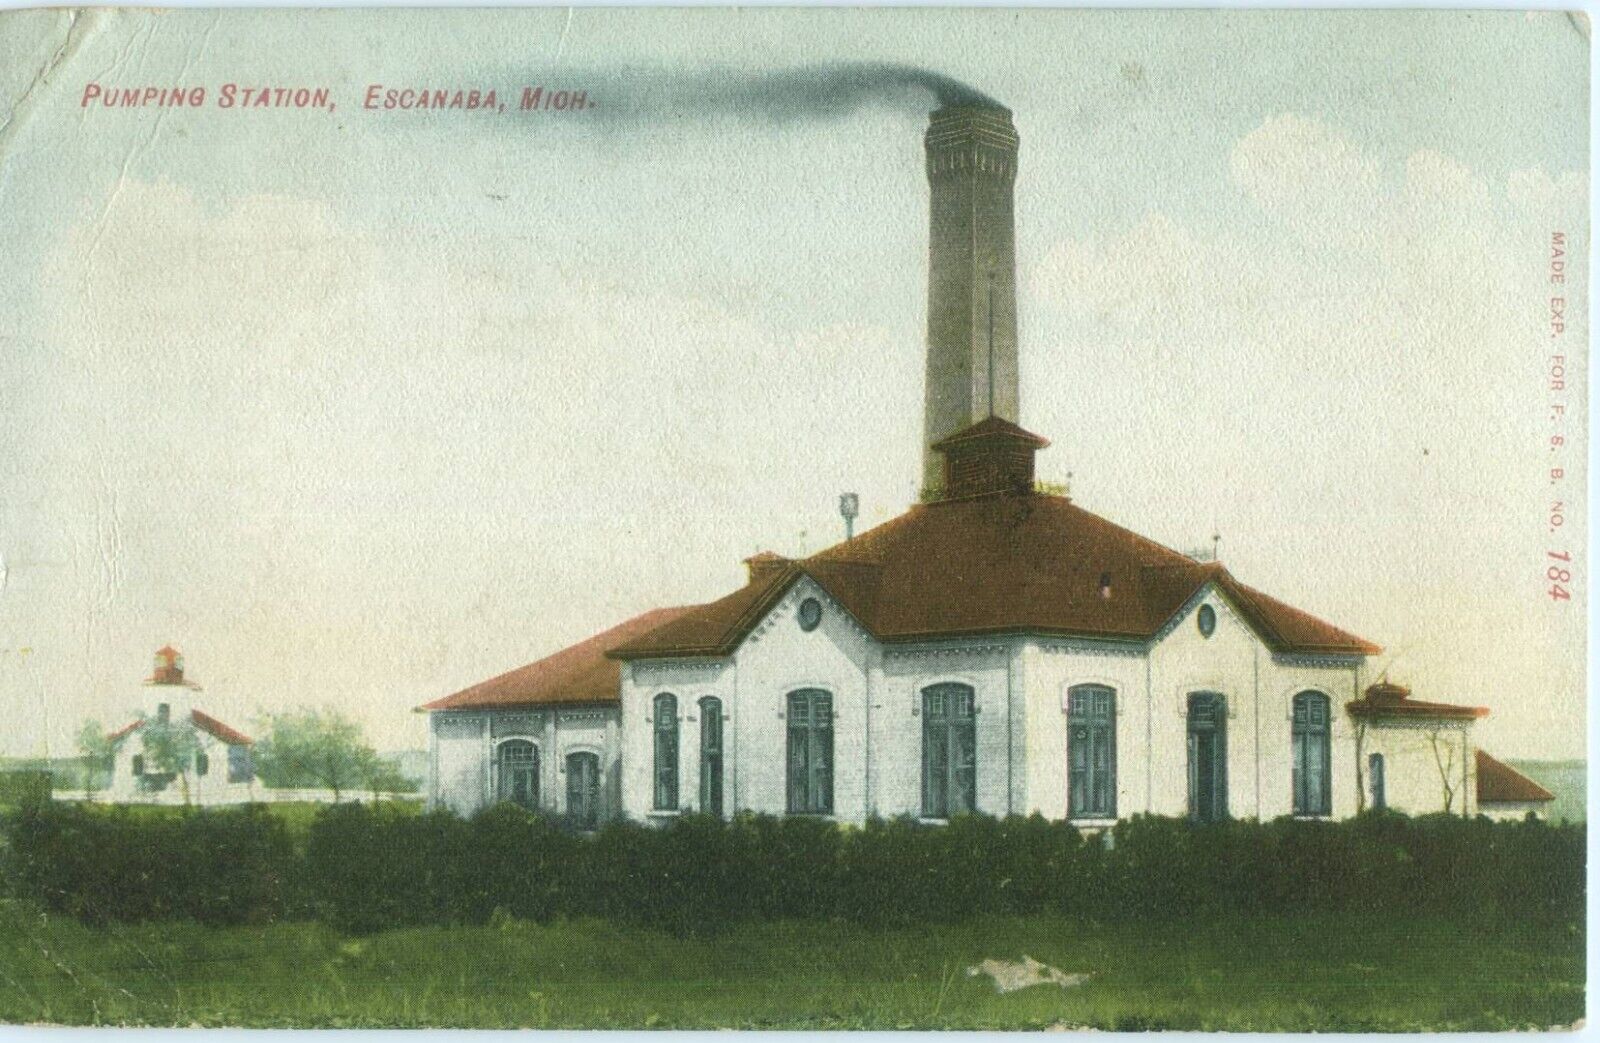 Pumping Station Escanaba Michigan USA Antique 1914 Postcard